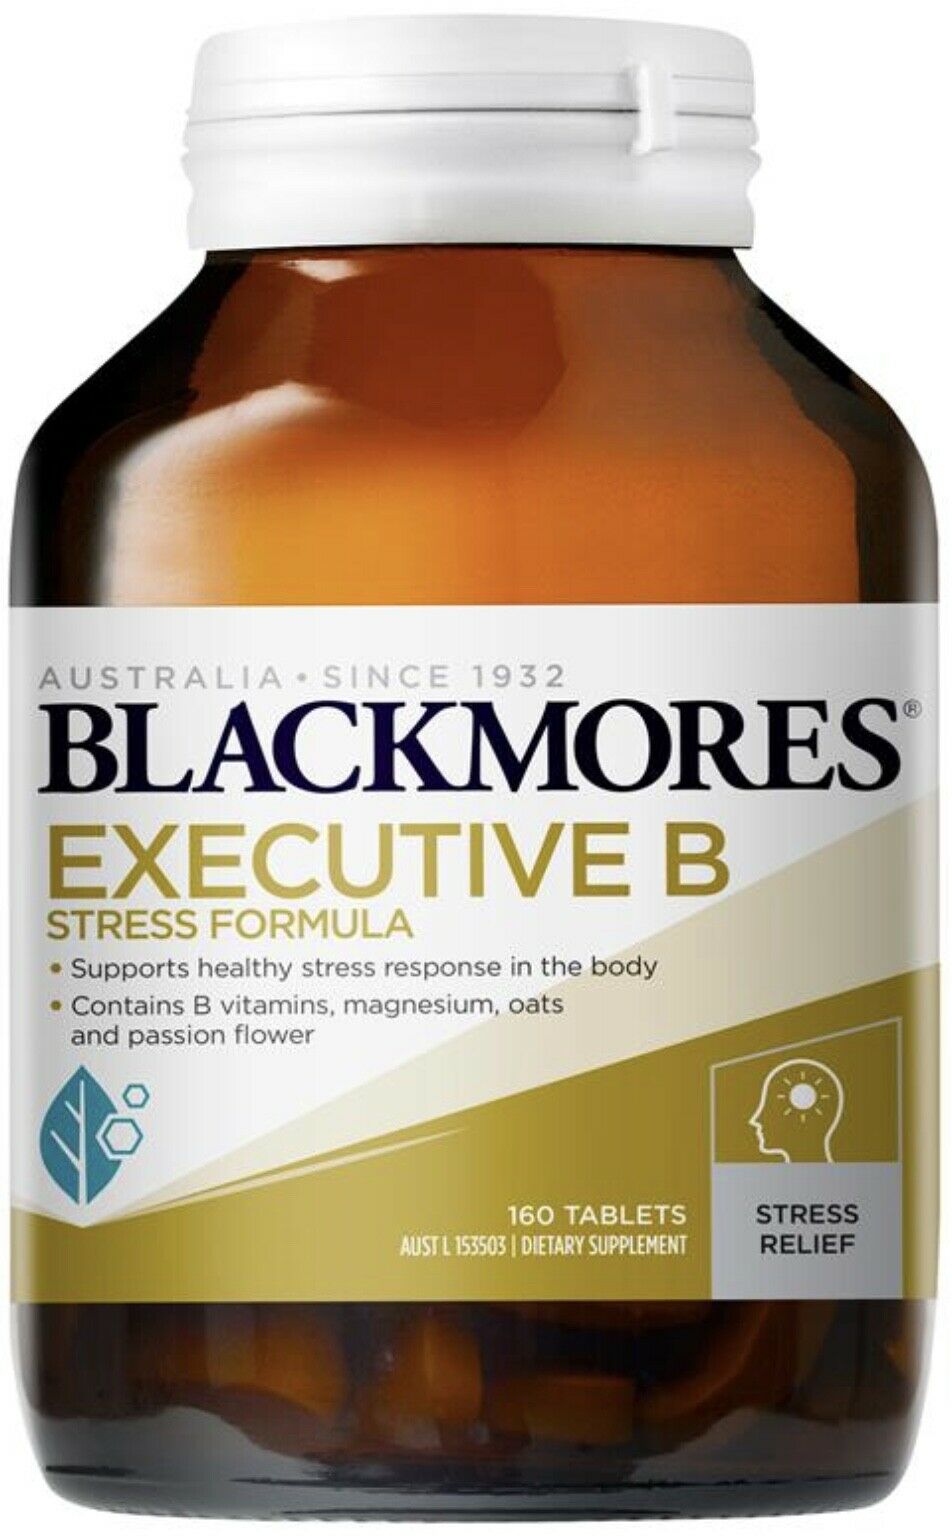 2 Bottles Blackmores Executive B Stress Formula Tab x160